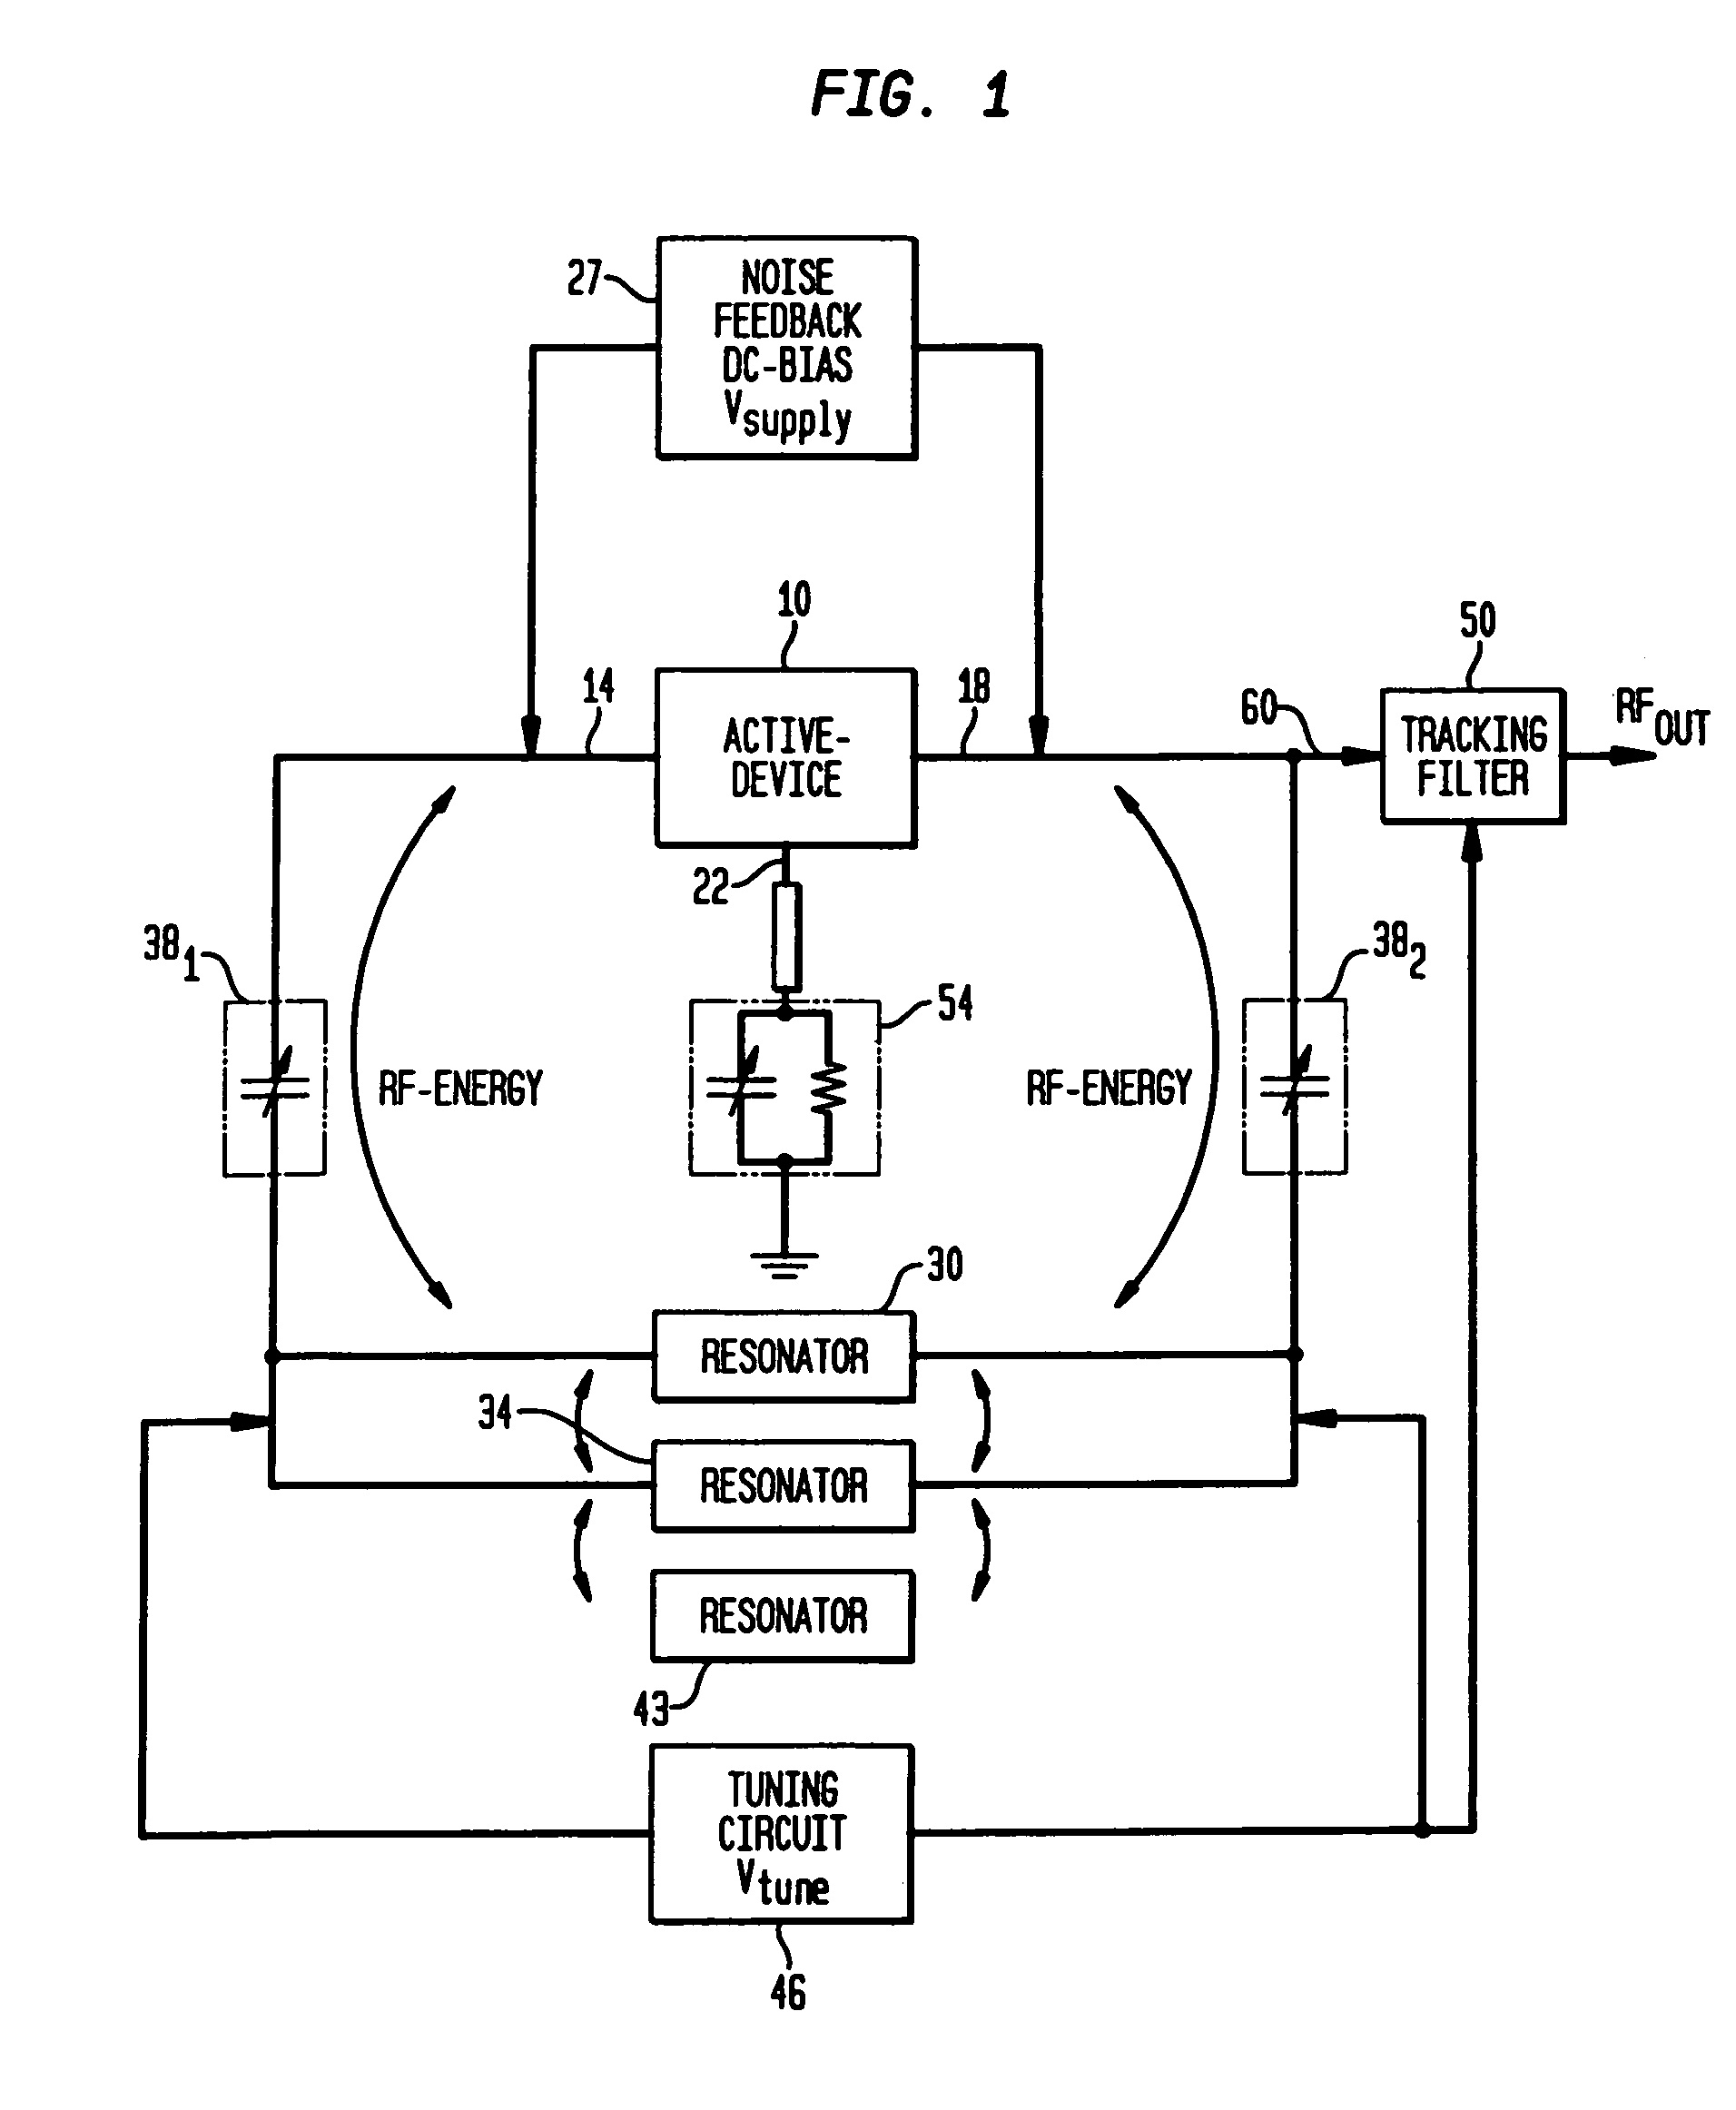 Wideband voltage controlled oscillator employing evanescent mode coupled-resonators